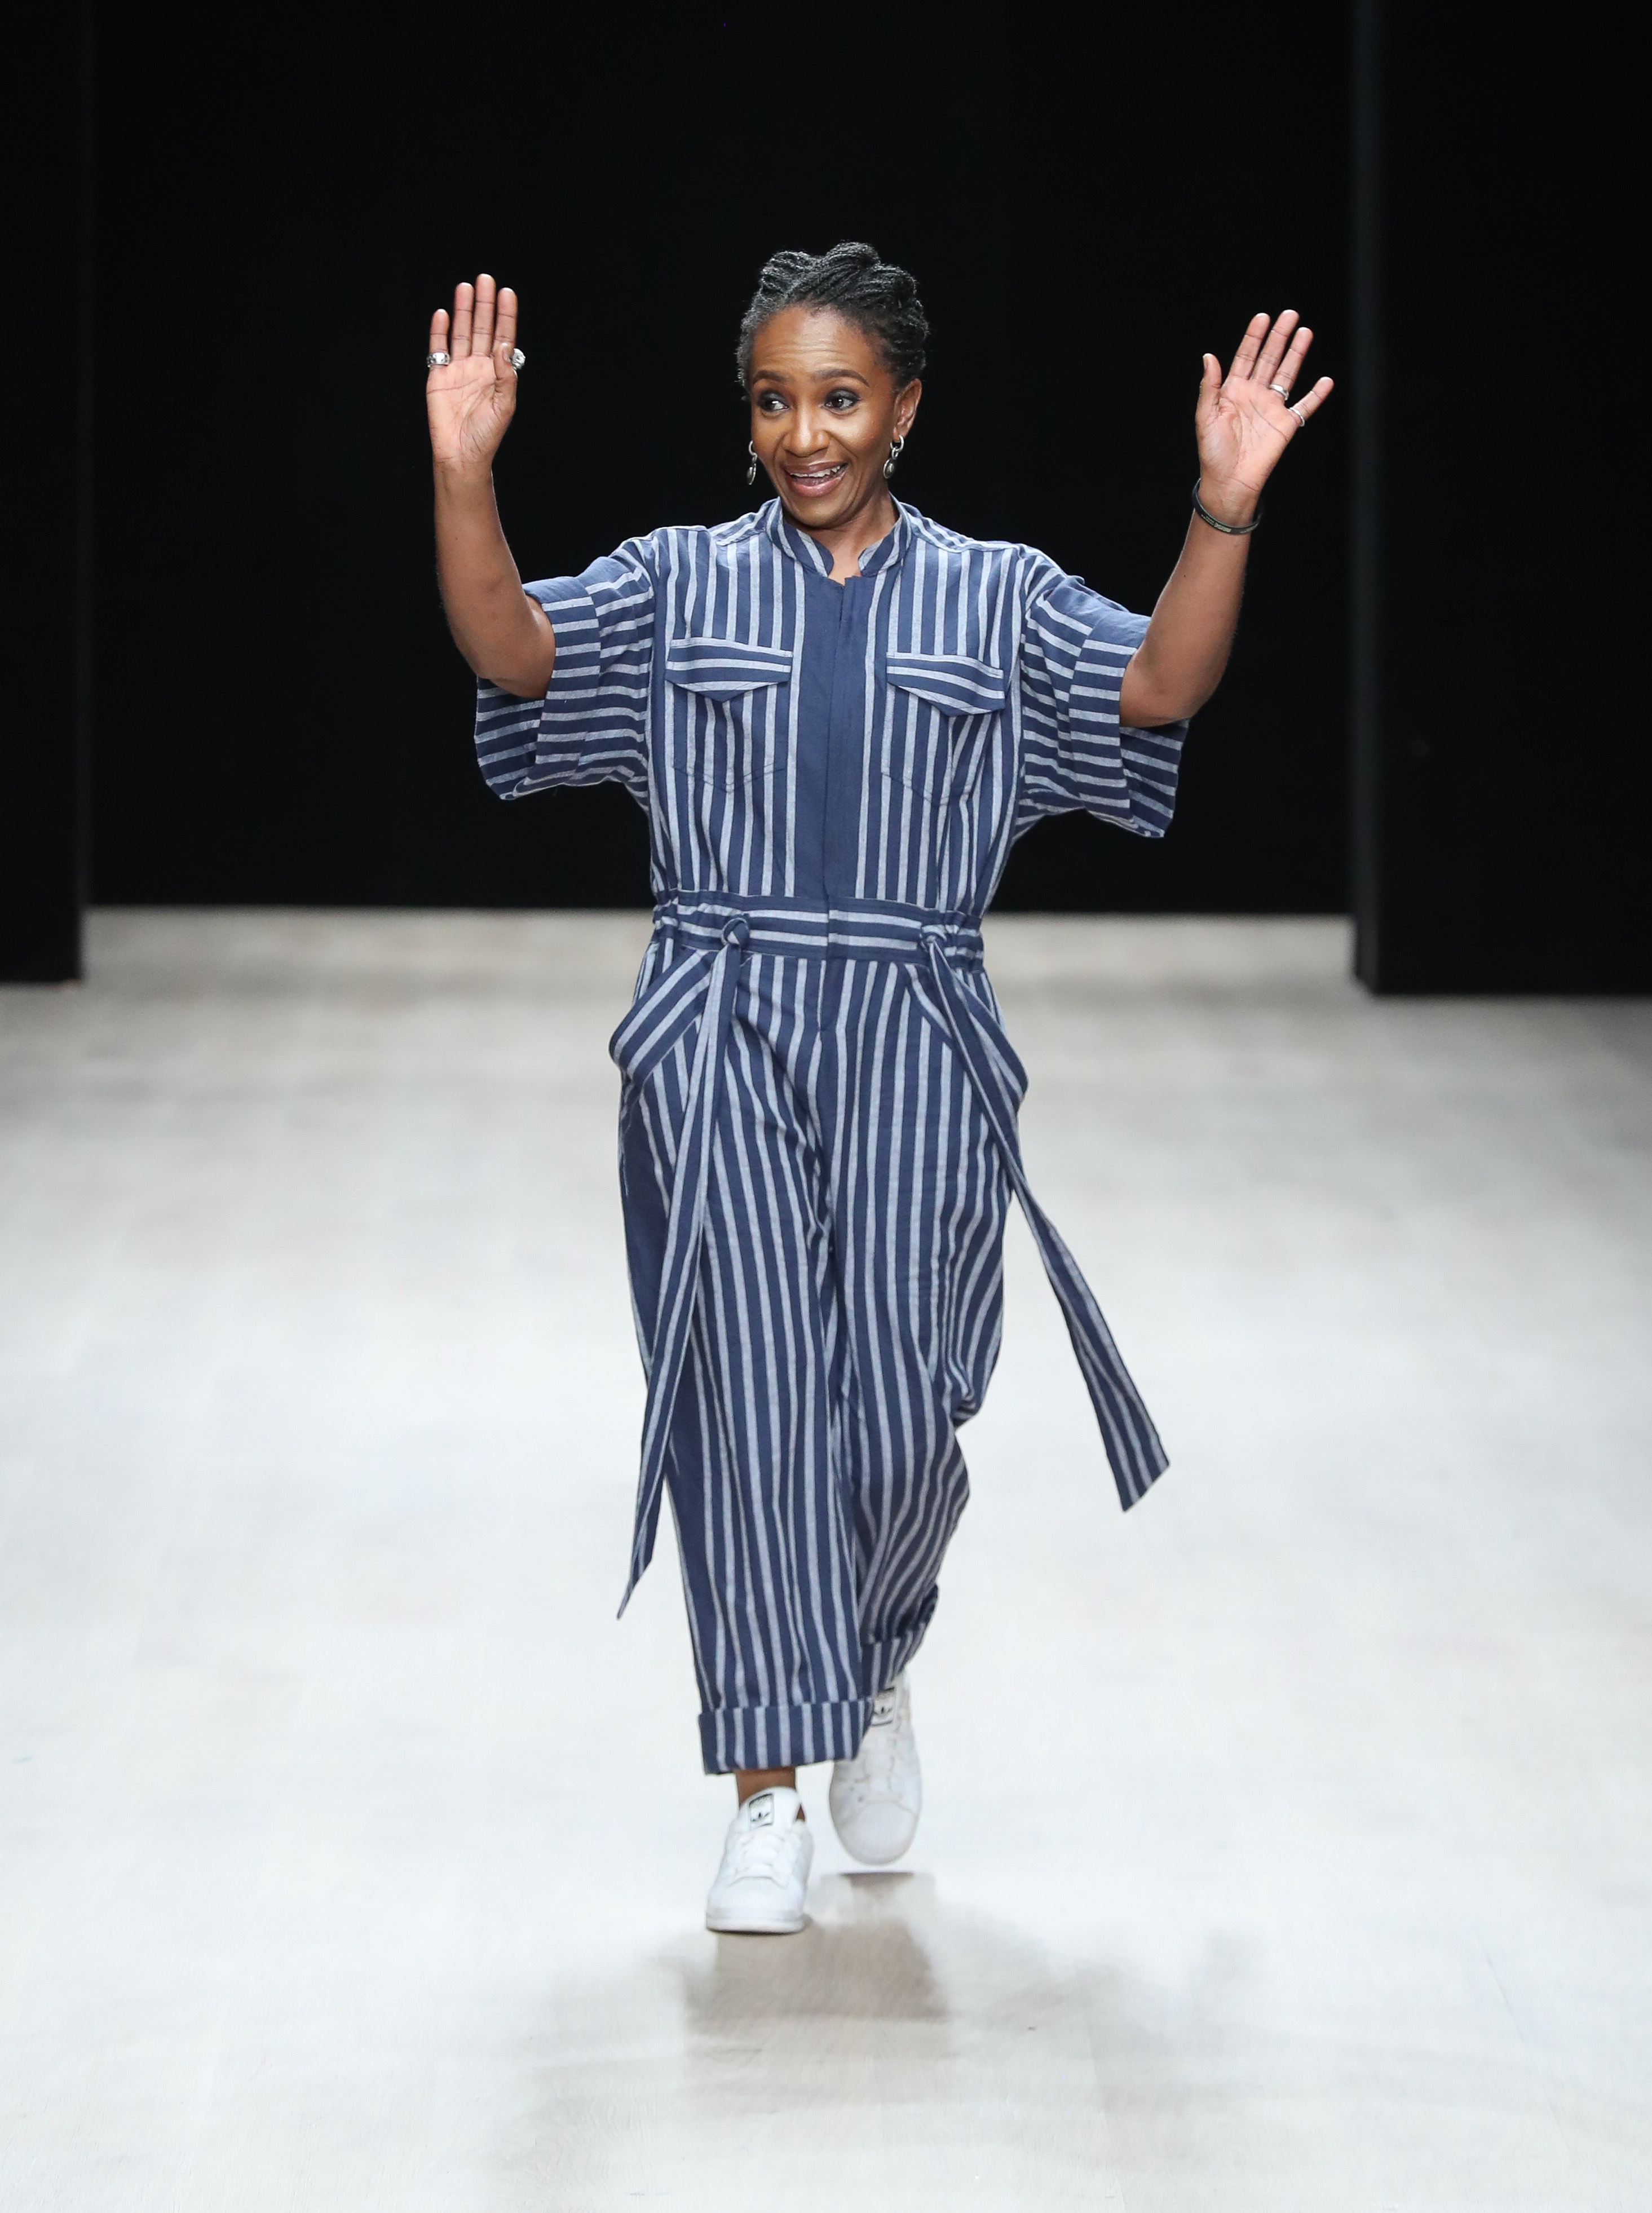 Nigerian fashion pioneer Folashade 'Shade' Thomas-Fahm will be celebrated at 'Africa Fashion' exhibition - CNN Style